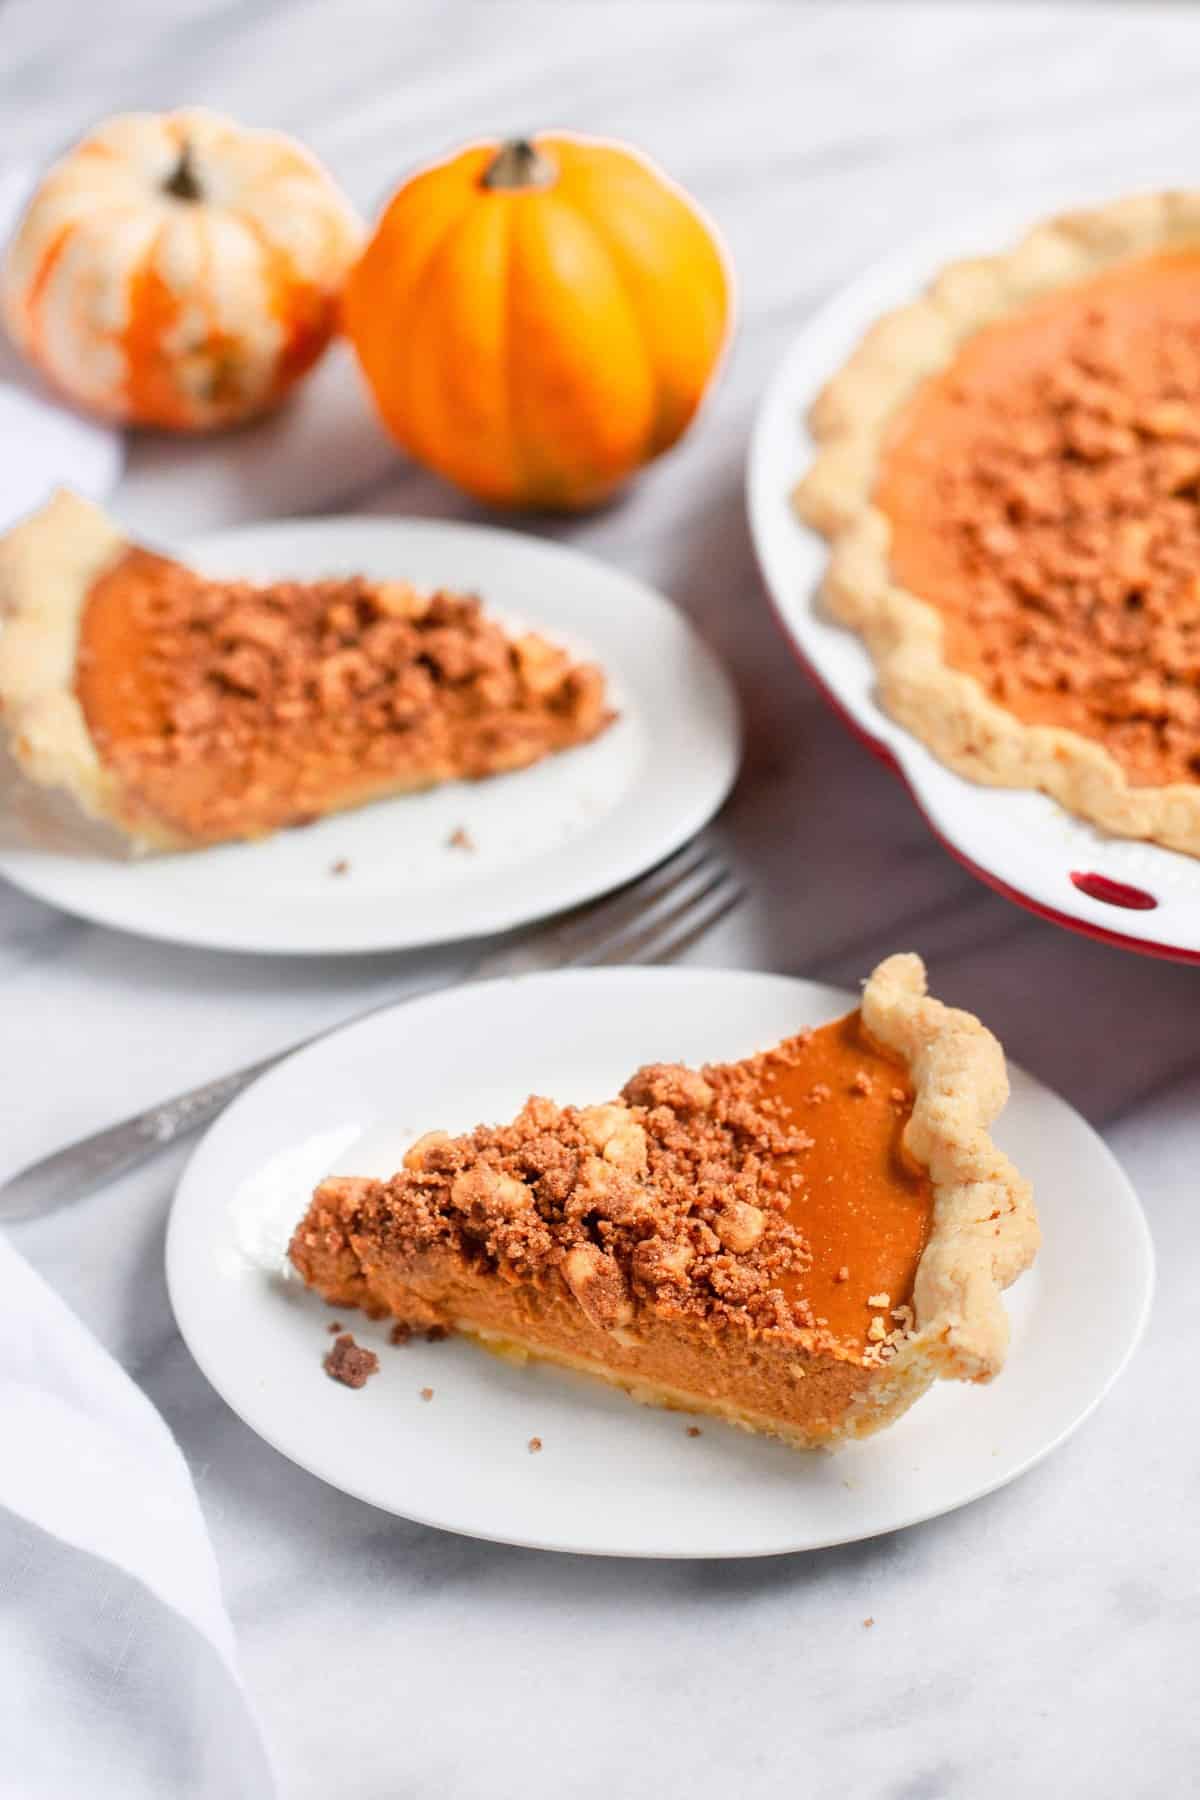 Slices of pumpkin pie with cinnamon walnut streusel on white plates